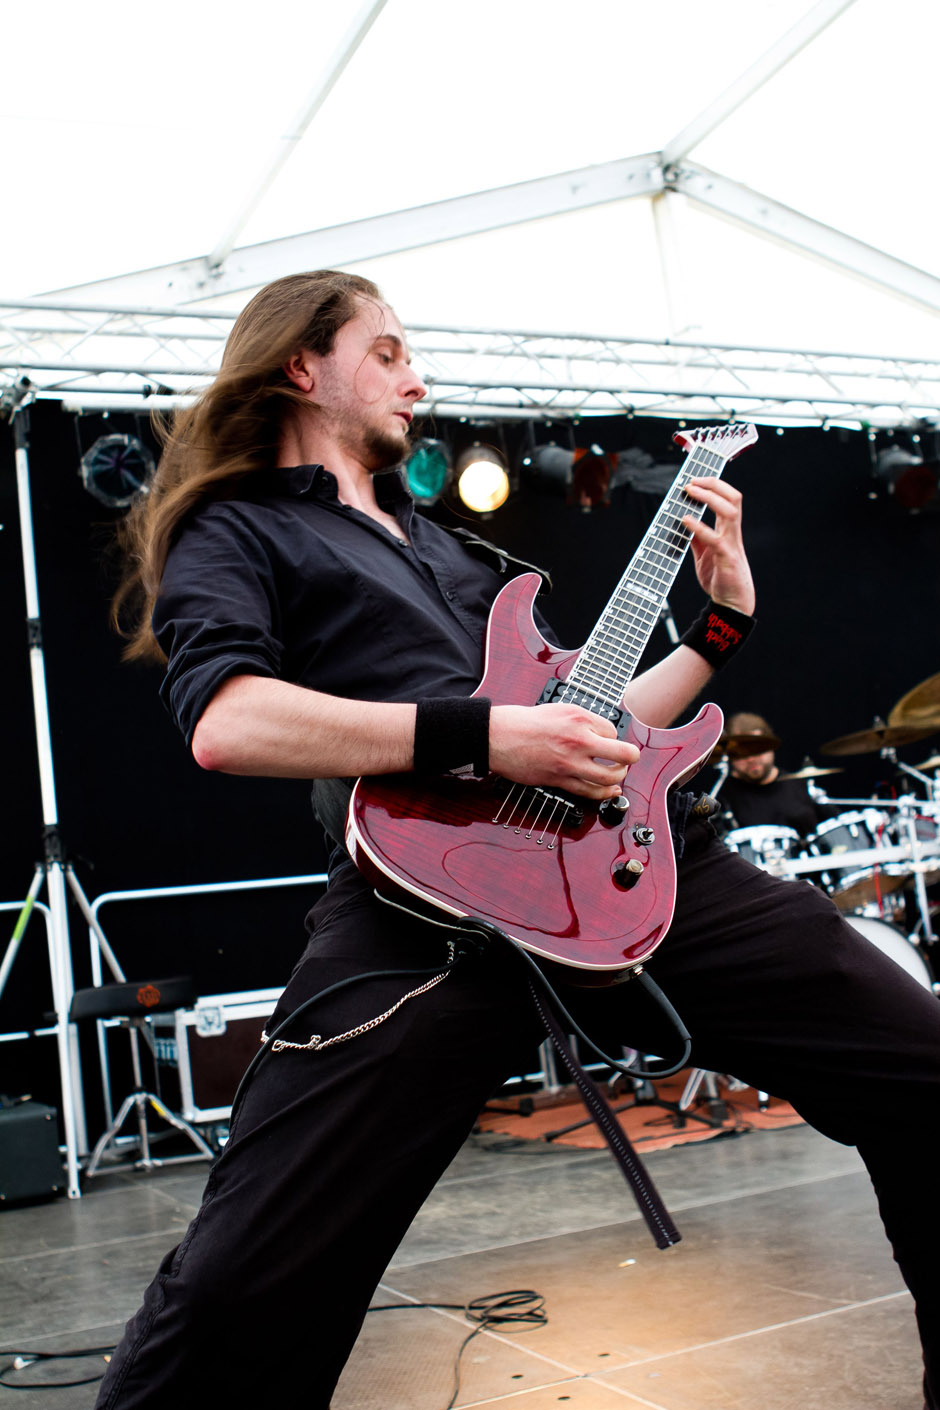 Deadborn live, Extremefest 2012 in Hünxe